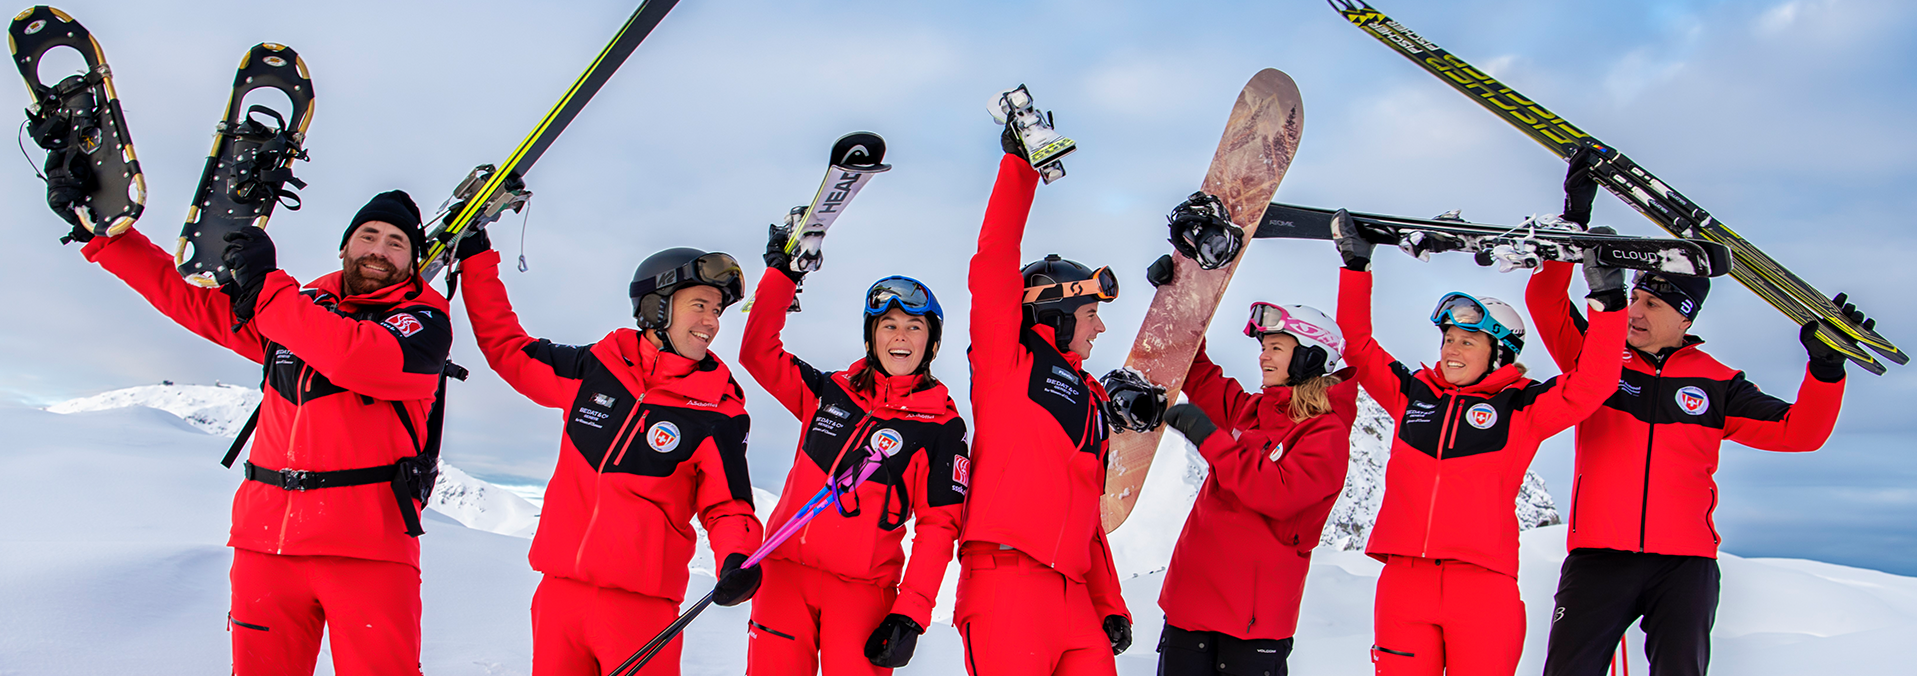 Klosters Ski School team on the slopes 